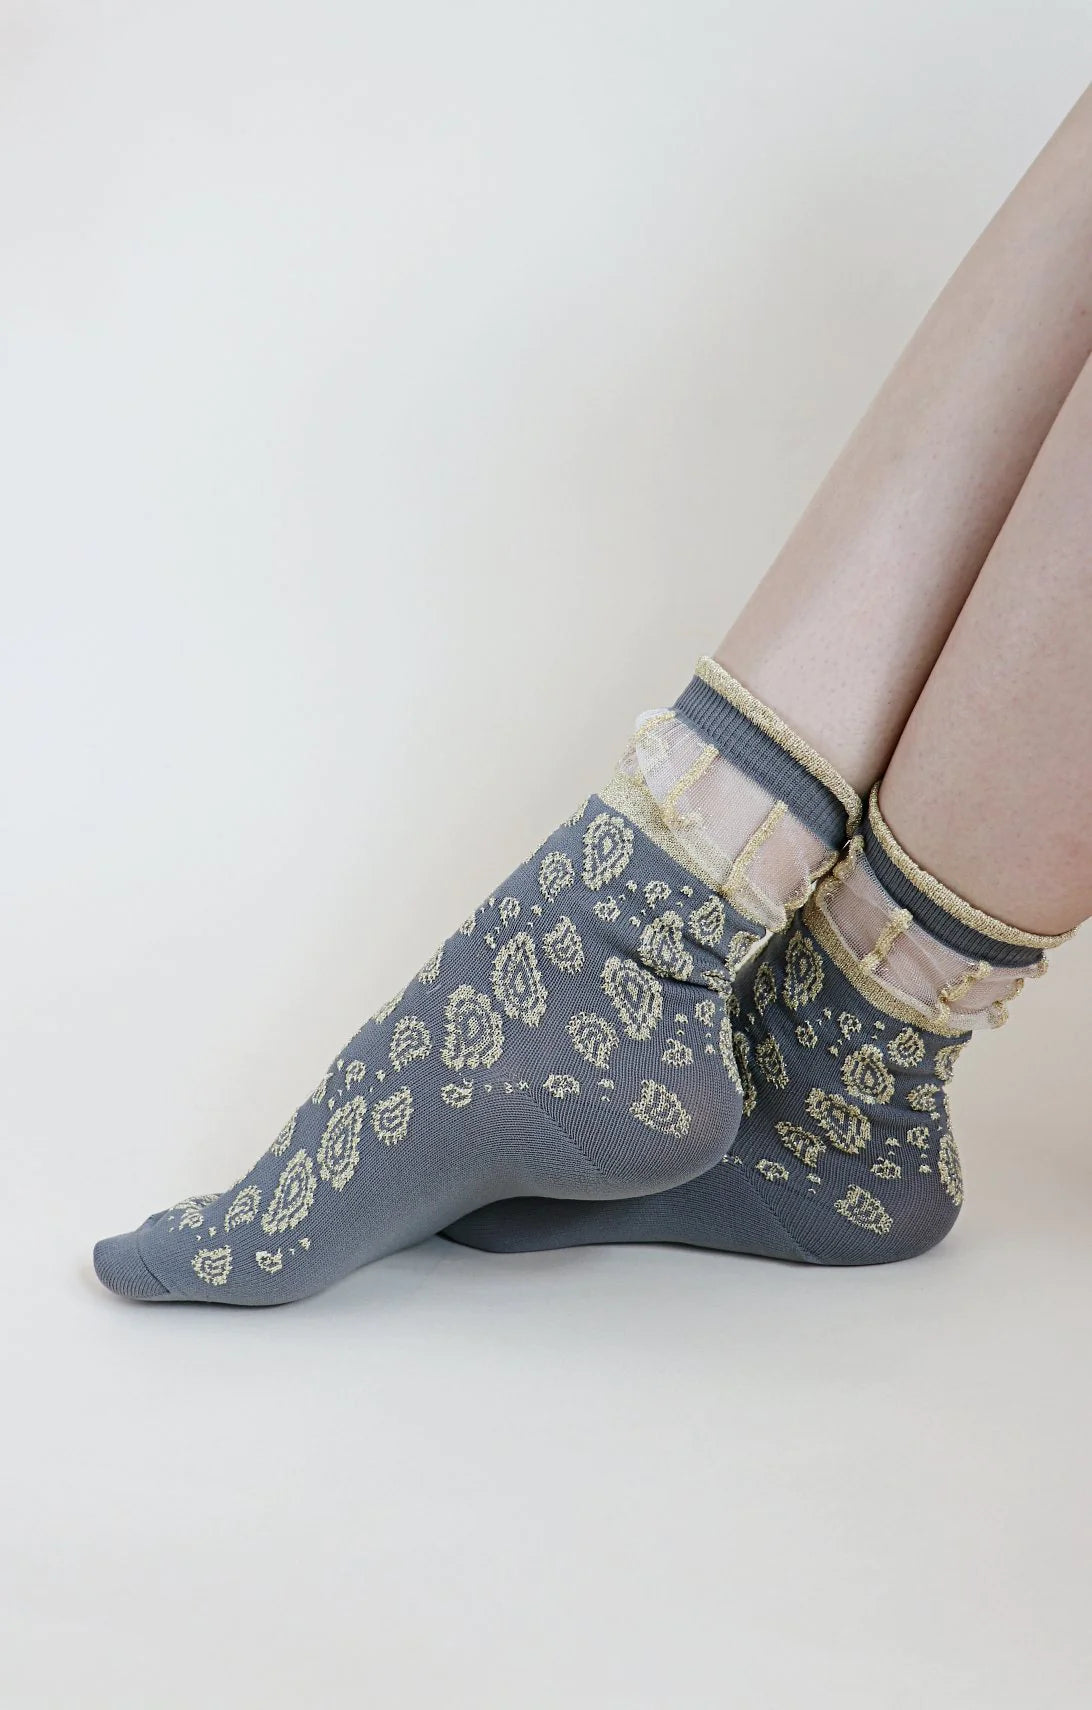 Socks named Golden Paisley Sheer Socks by Tabbisocks, MIDDLE GREY color, side angle